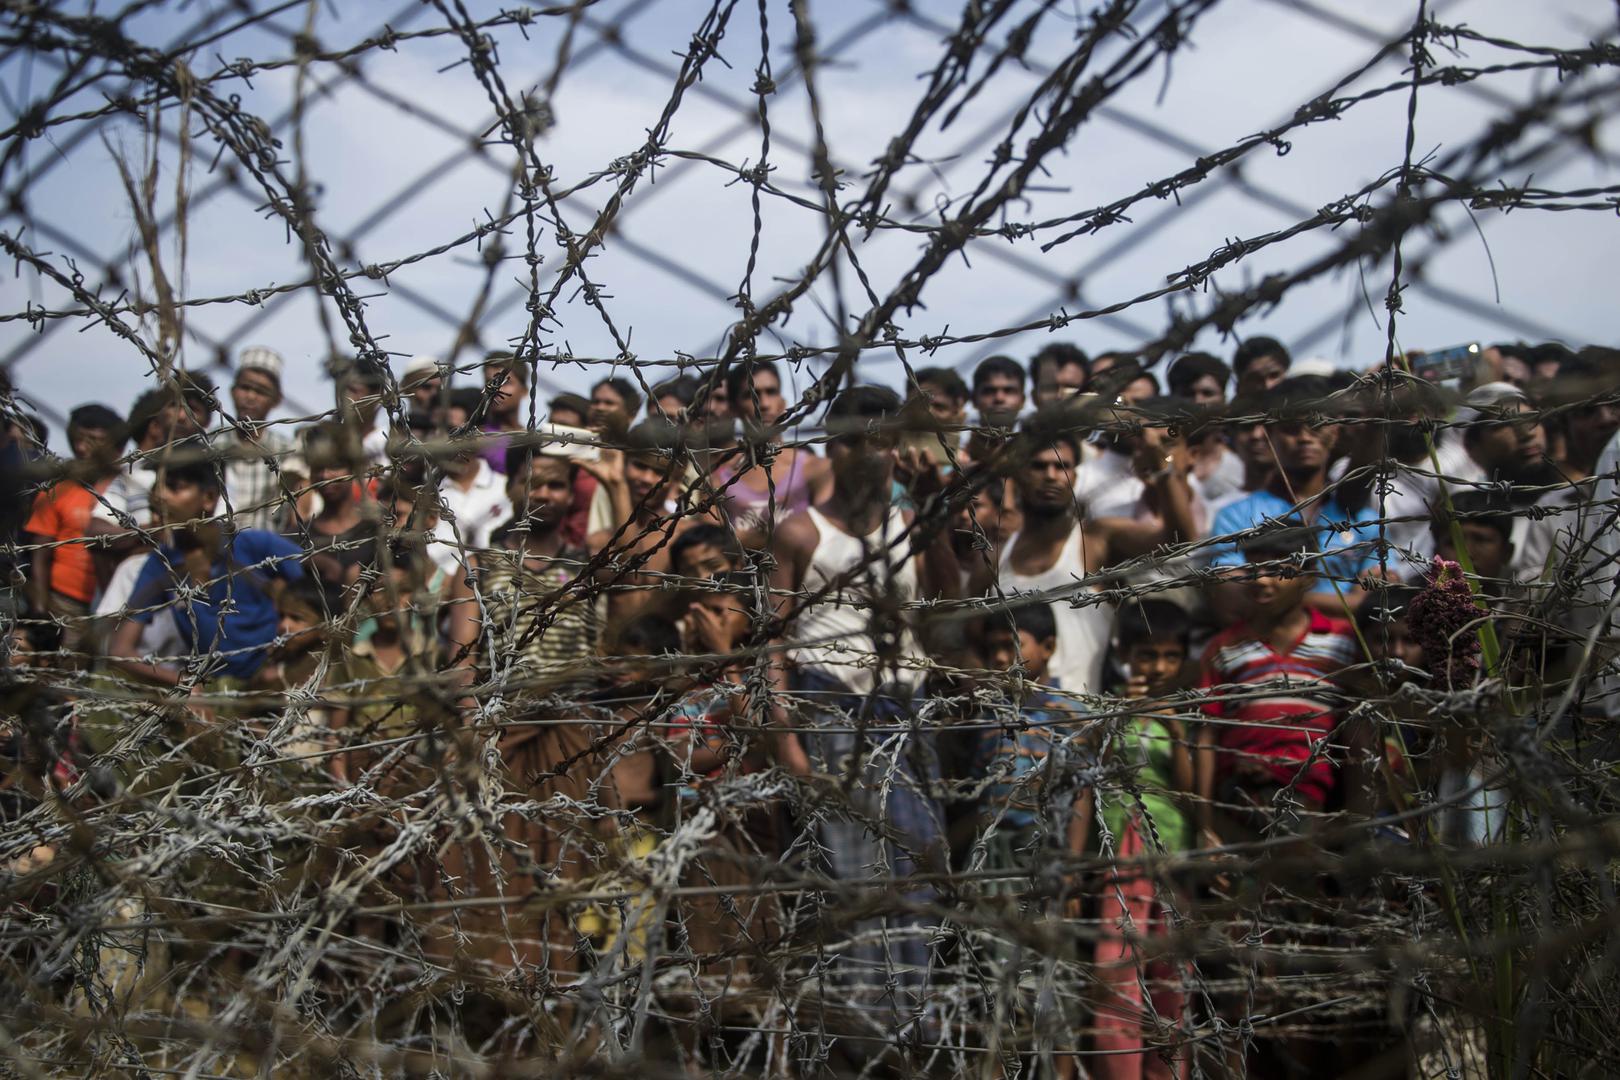 Pengungsi Myanmar berkumpul di balik pagar kawat di zona perbatasan “no-man’s land” antara Myanmar dan Bangladesh, 25 April 2015. 